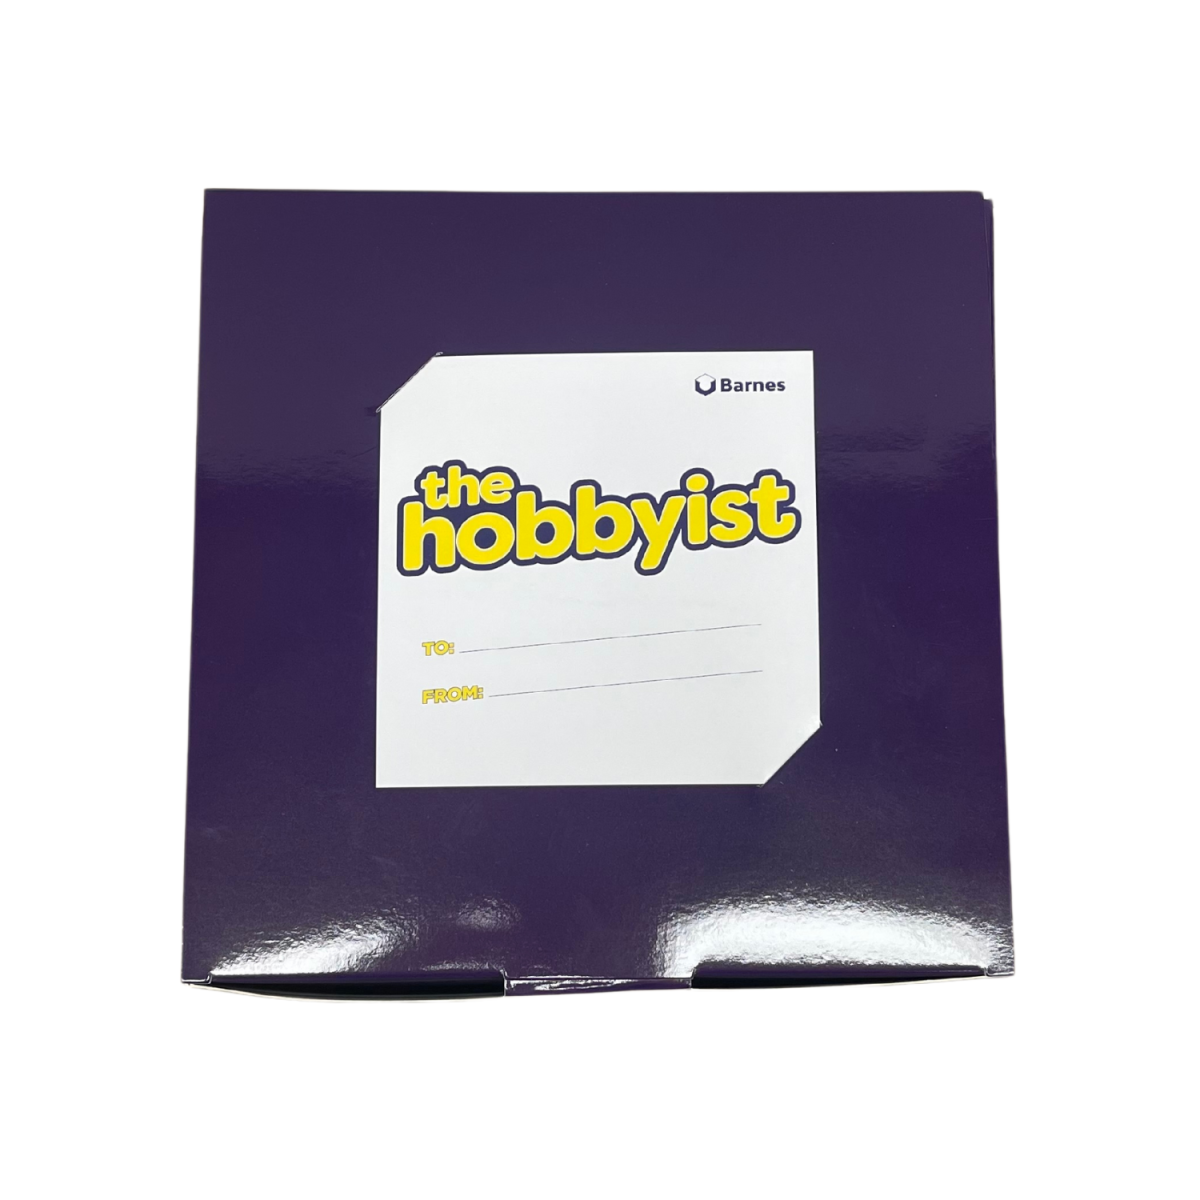 The Hobbyist Gift Pack